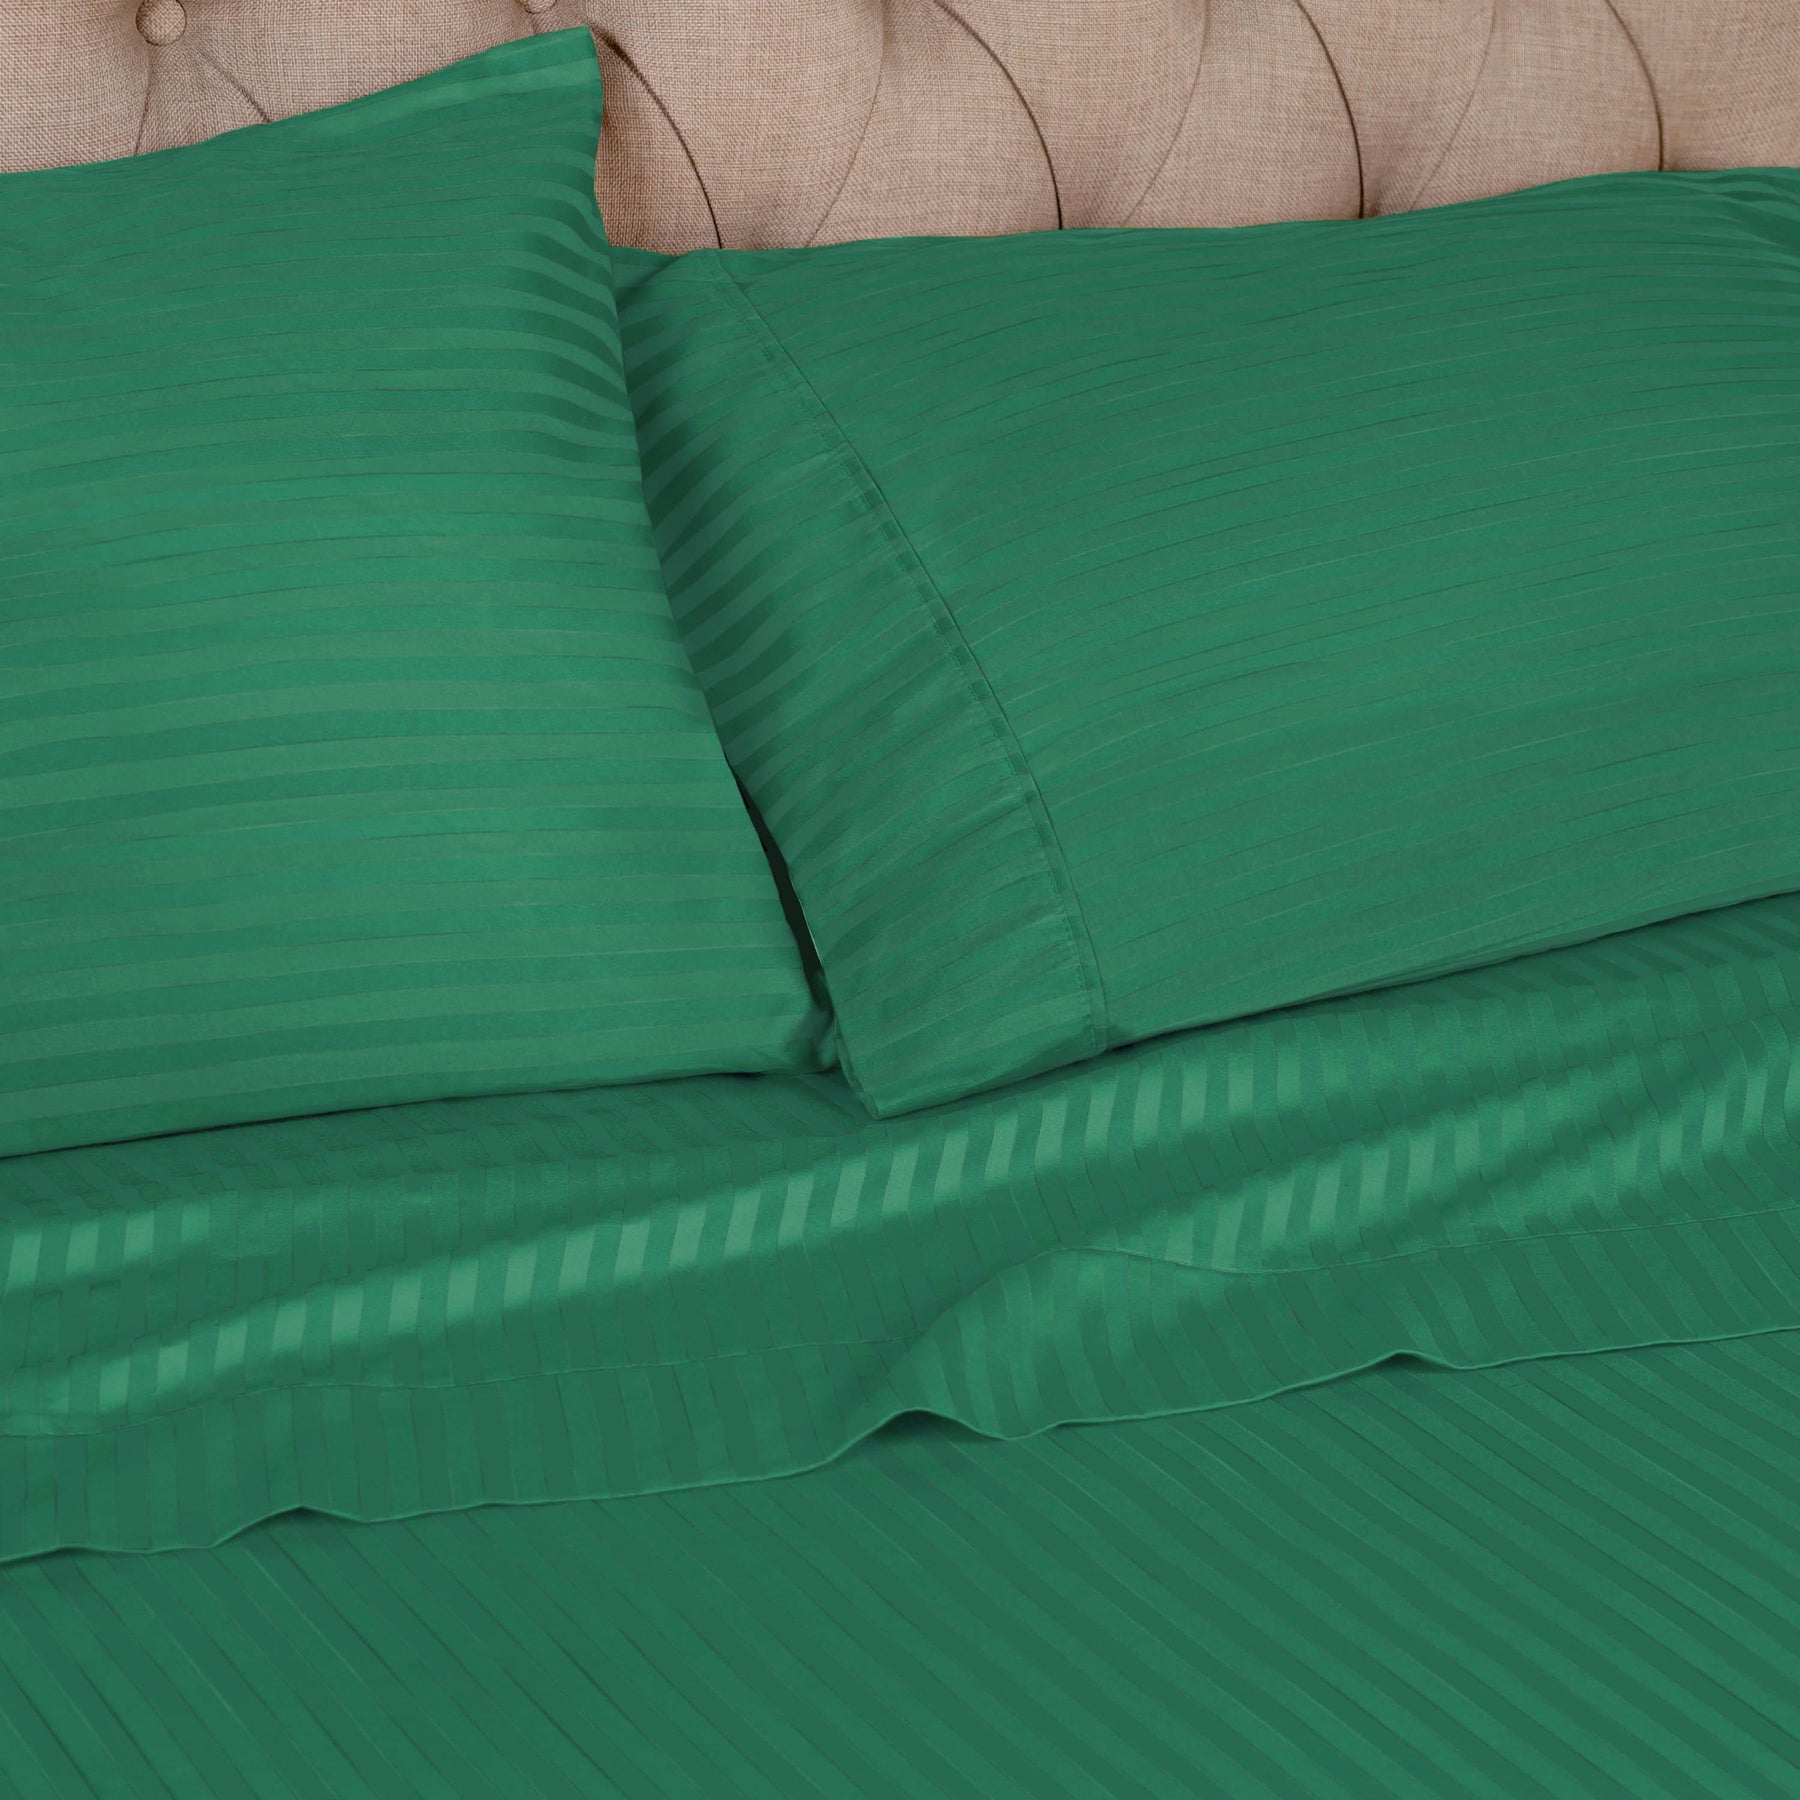 300 Thread Count Soft Egyptian Cotton Pillowcase Set - Hunter Green